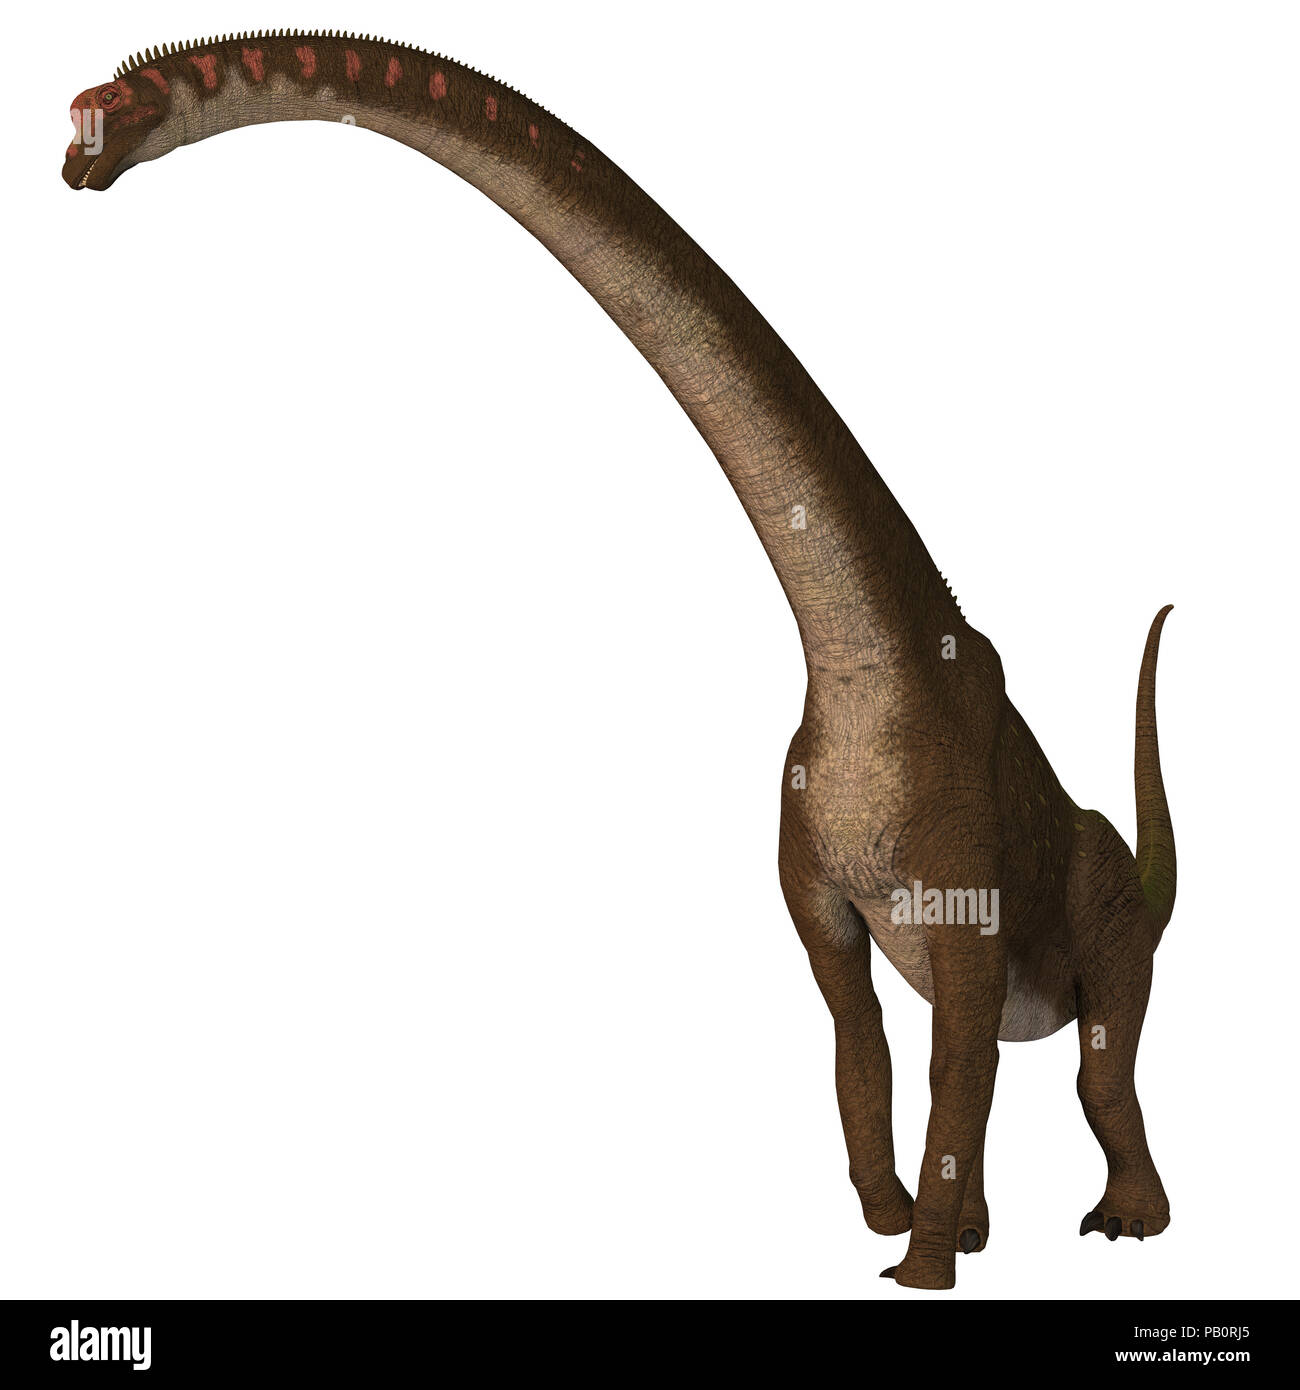 Giraffatitan Dinosaur on White - Giraffatitan was a herbivorous sauropod dinosaur that lived in Africa during the Jurassic Period. Stock Photo